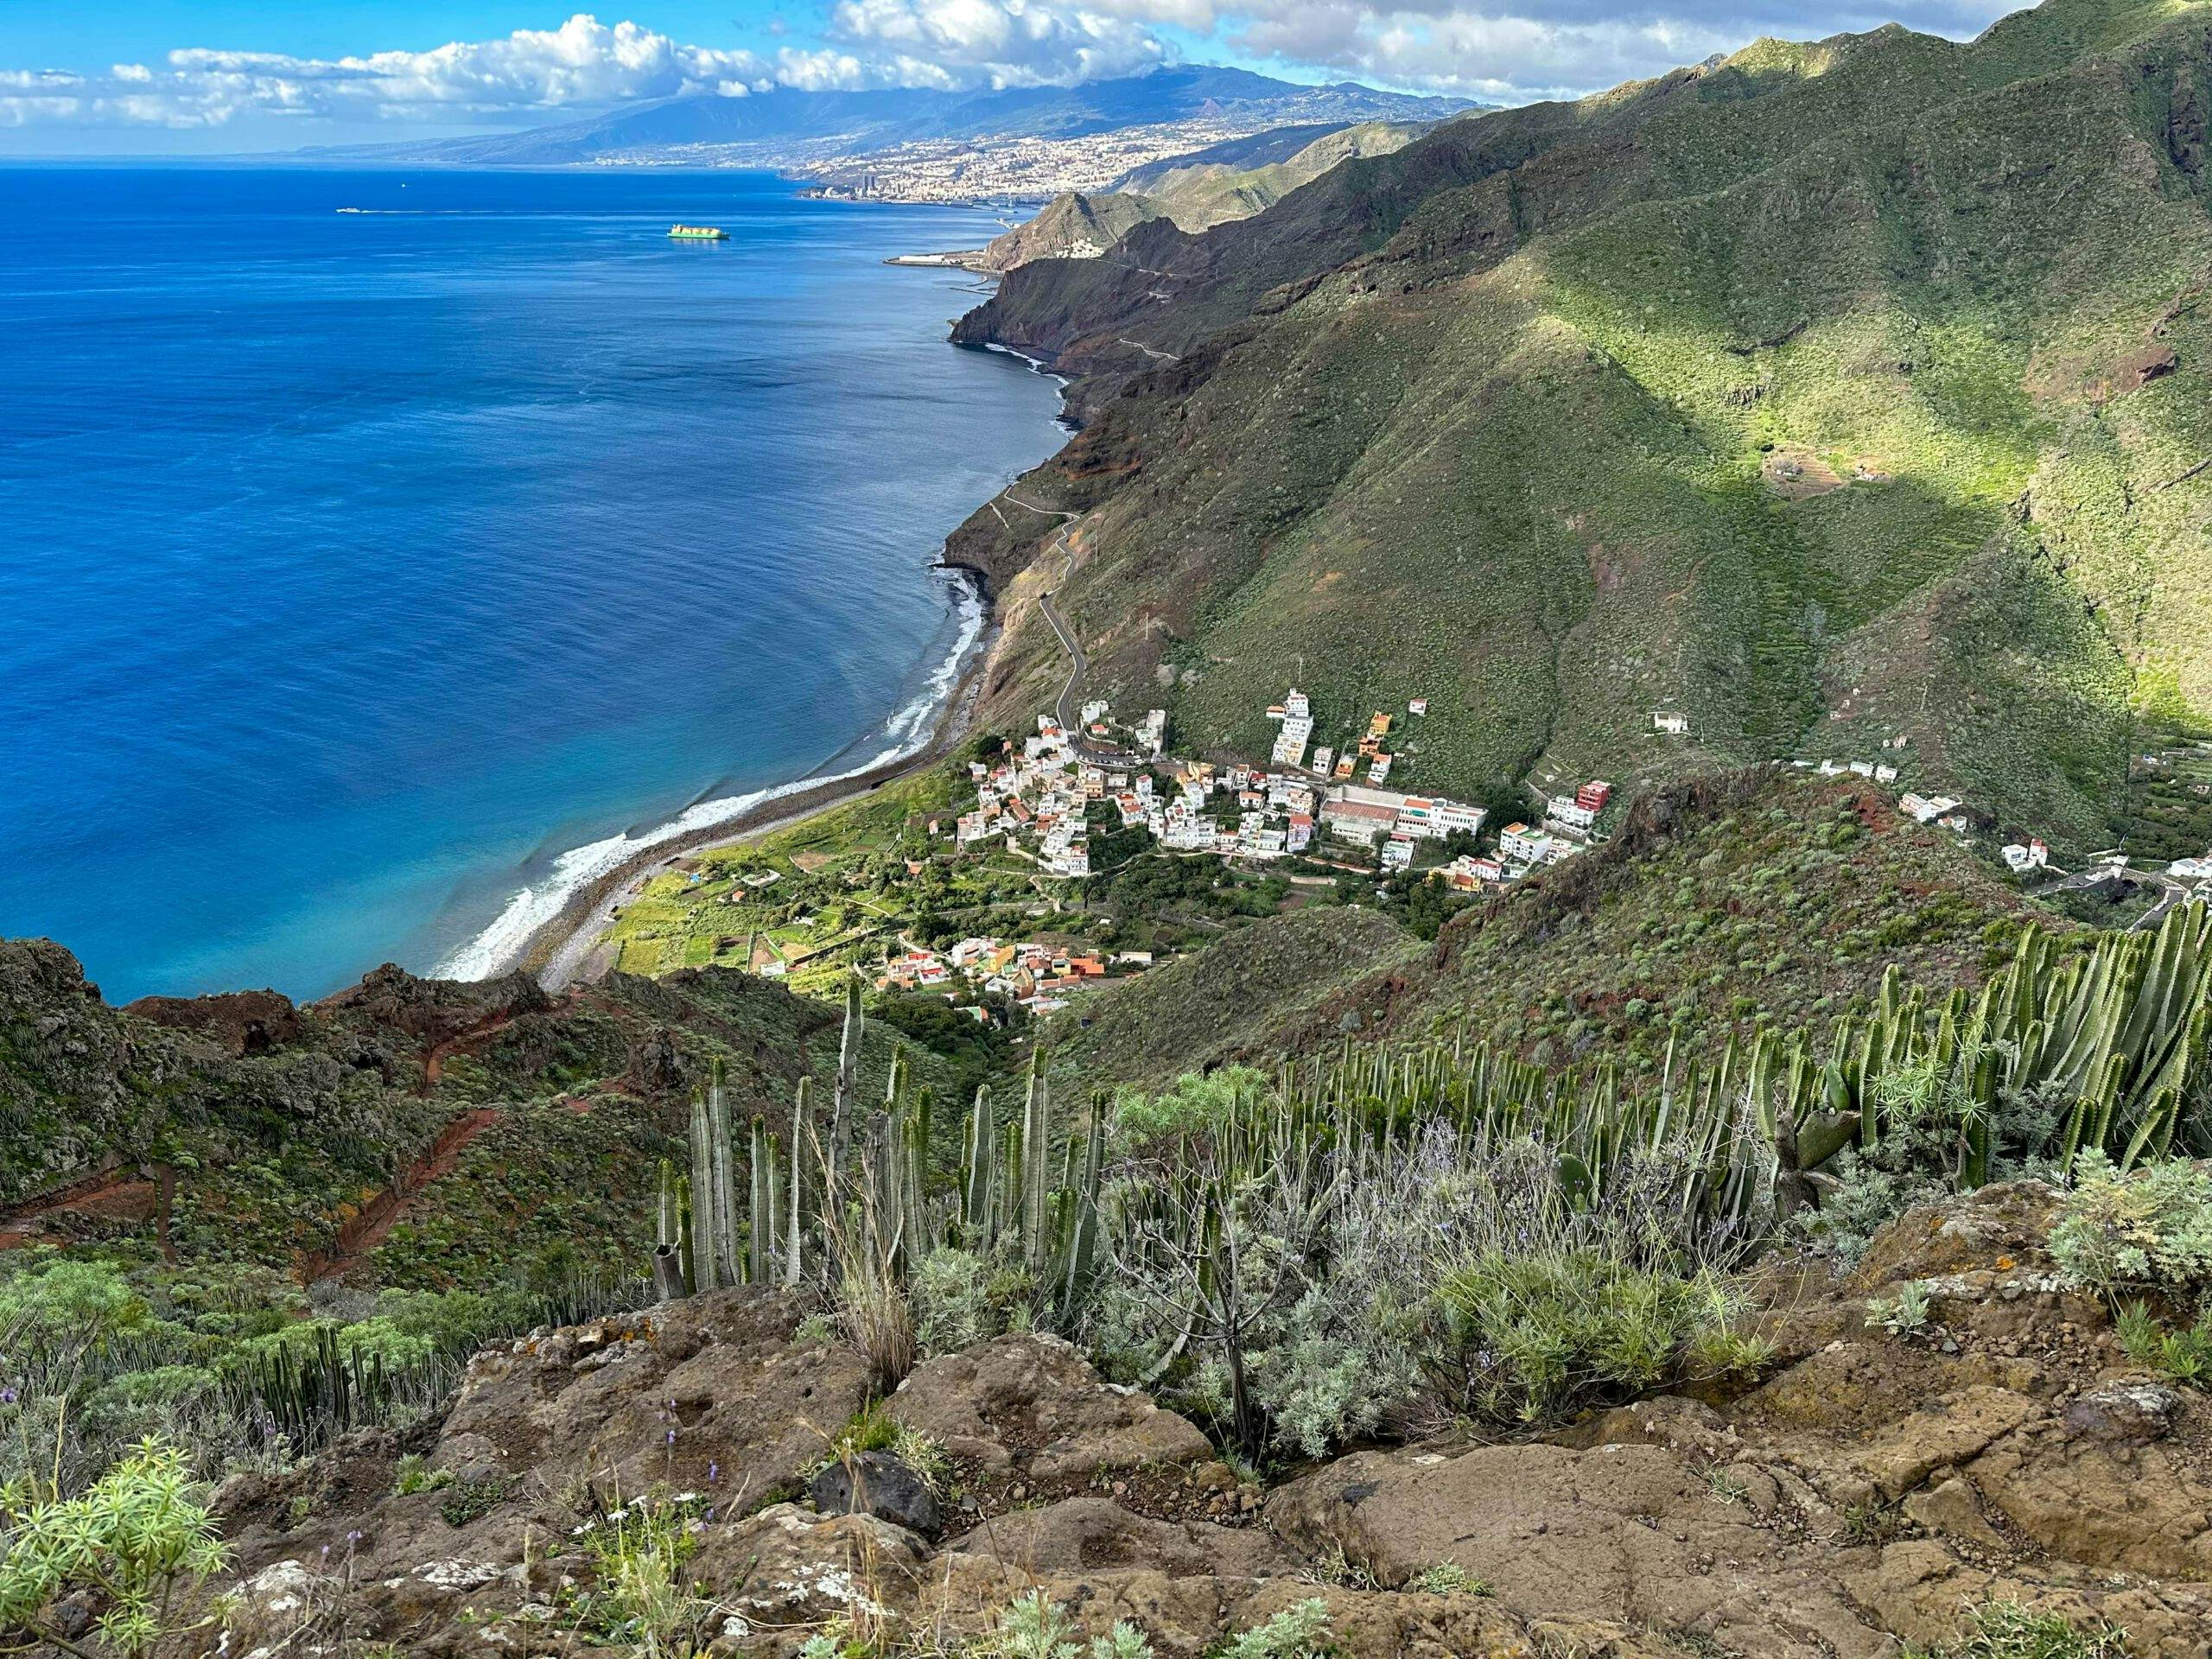 View from the ascent path to Igueste de San Andrés and Santa Cruz de Tenerife